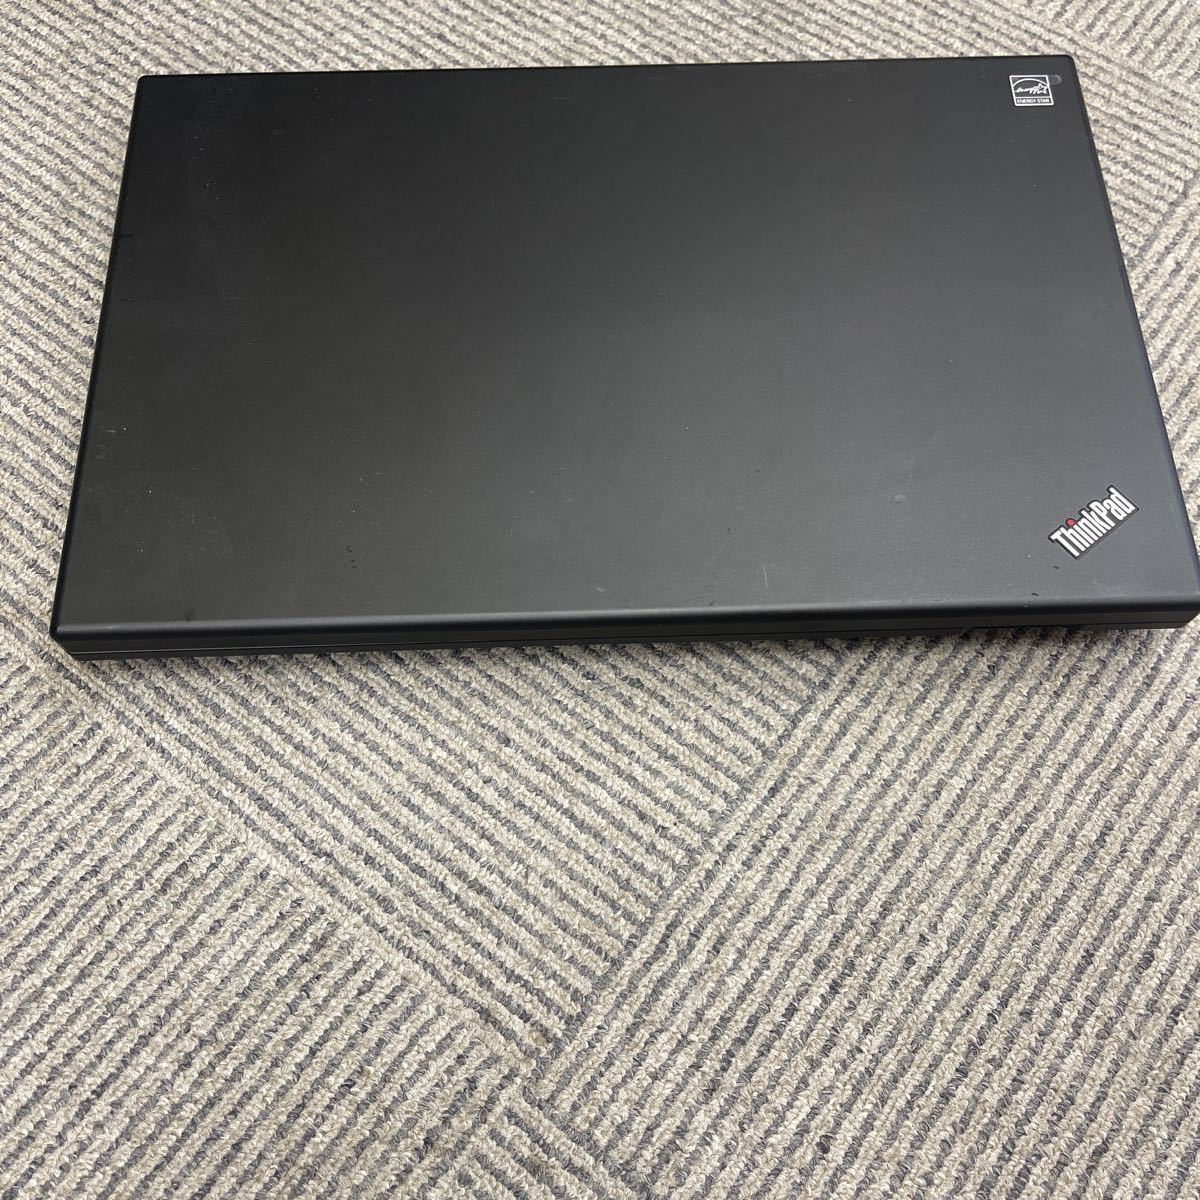 Lenovo ThinkPad ノートパソコン sl510 type2847 item details | Yahoo